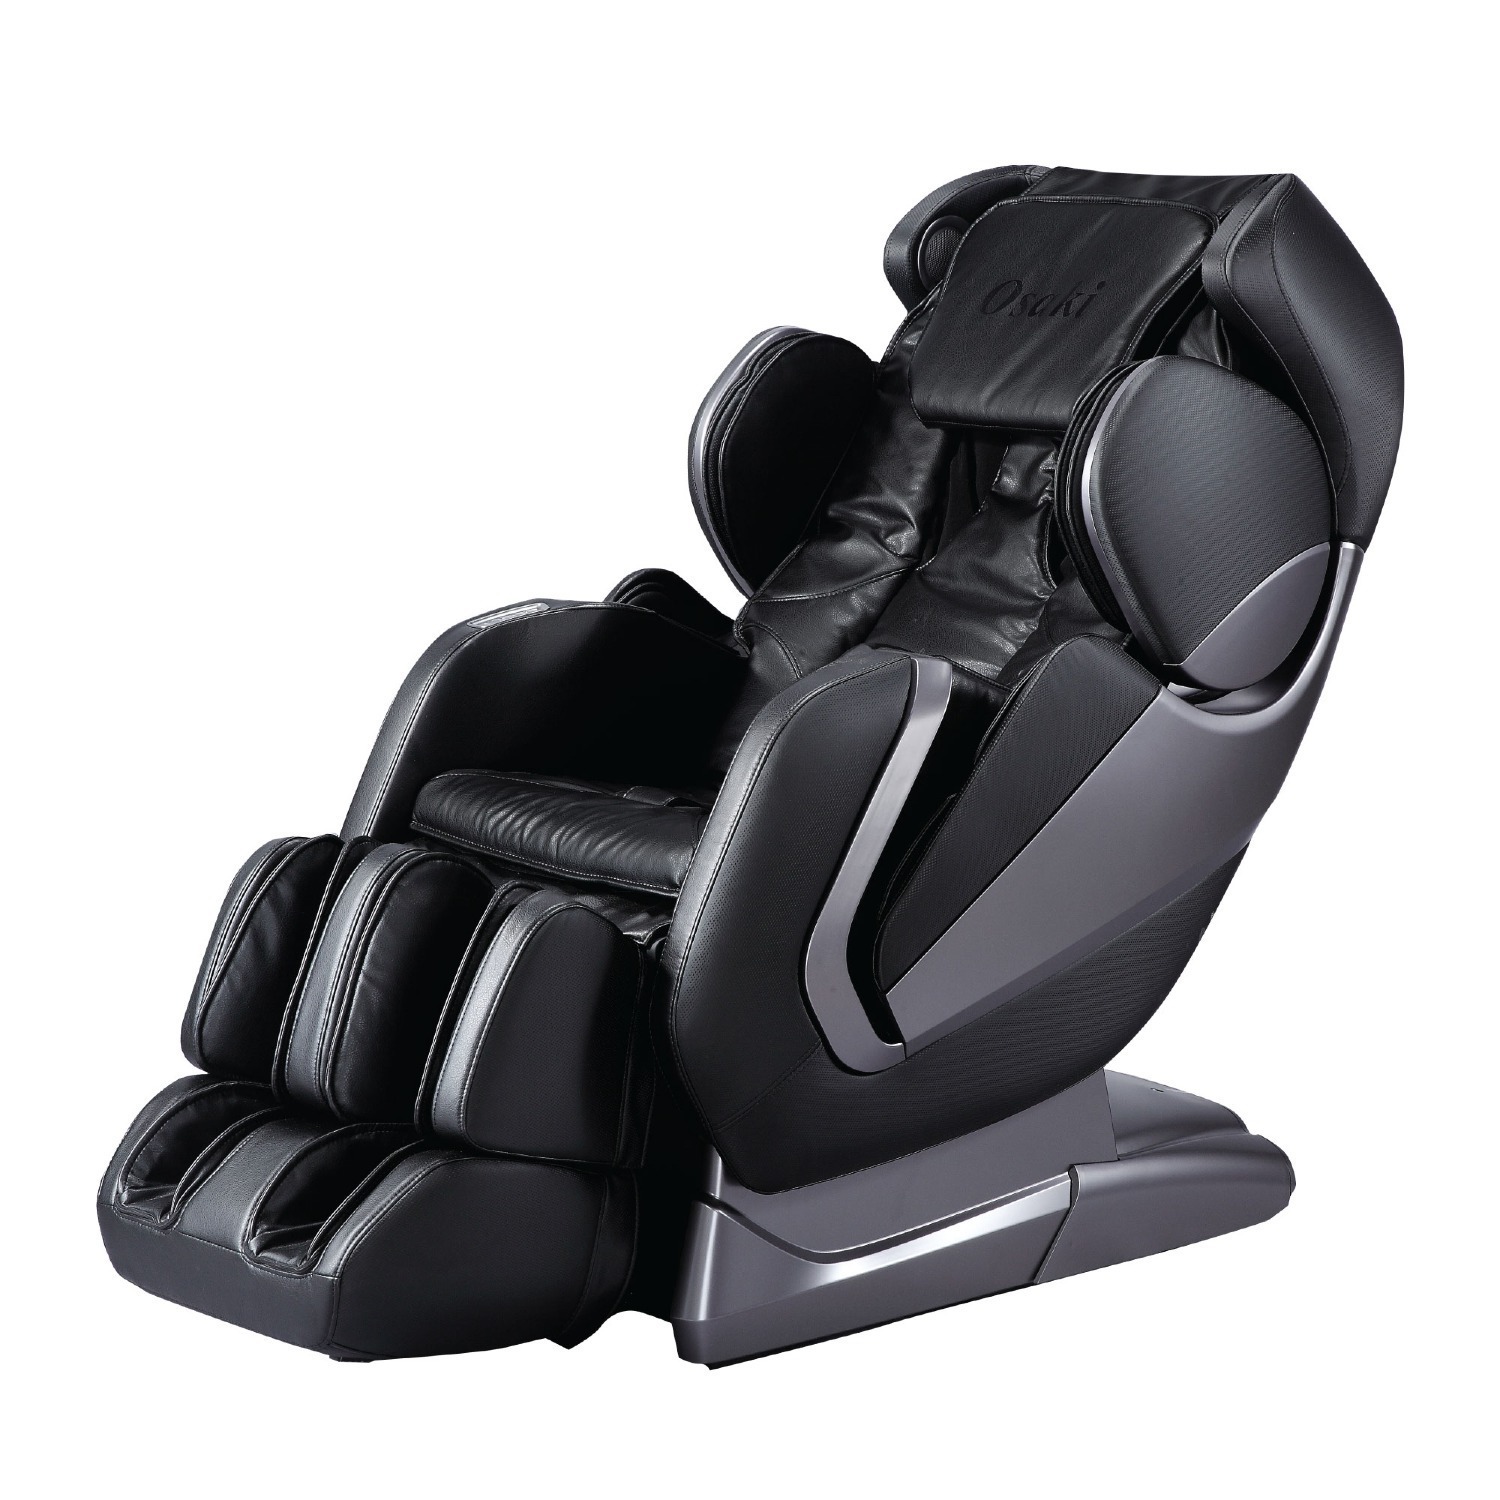 Titan Pro-Alpha 2D Zero Gravity Massage Chair (Black, Brown, or Beige) $999 + Free Shipping